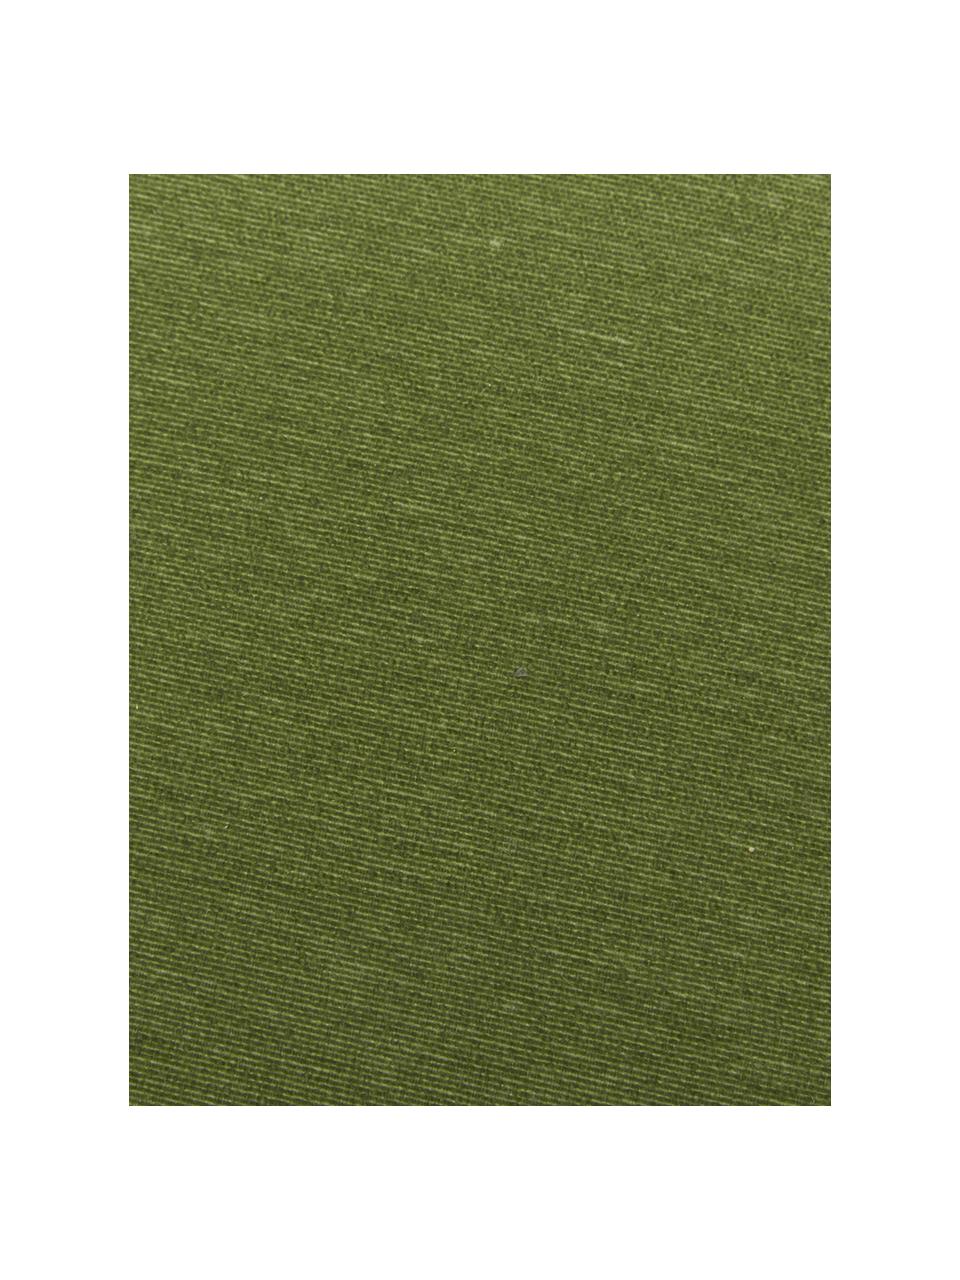 Einfarbige Bankauflage Panama in Grün, Bezug: 50% Baumwolle, 45% Polyes, Grün, 48 x 120 cm